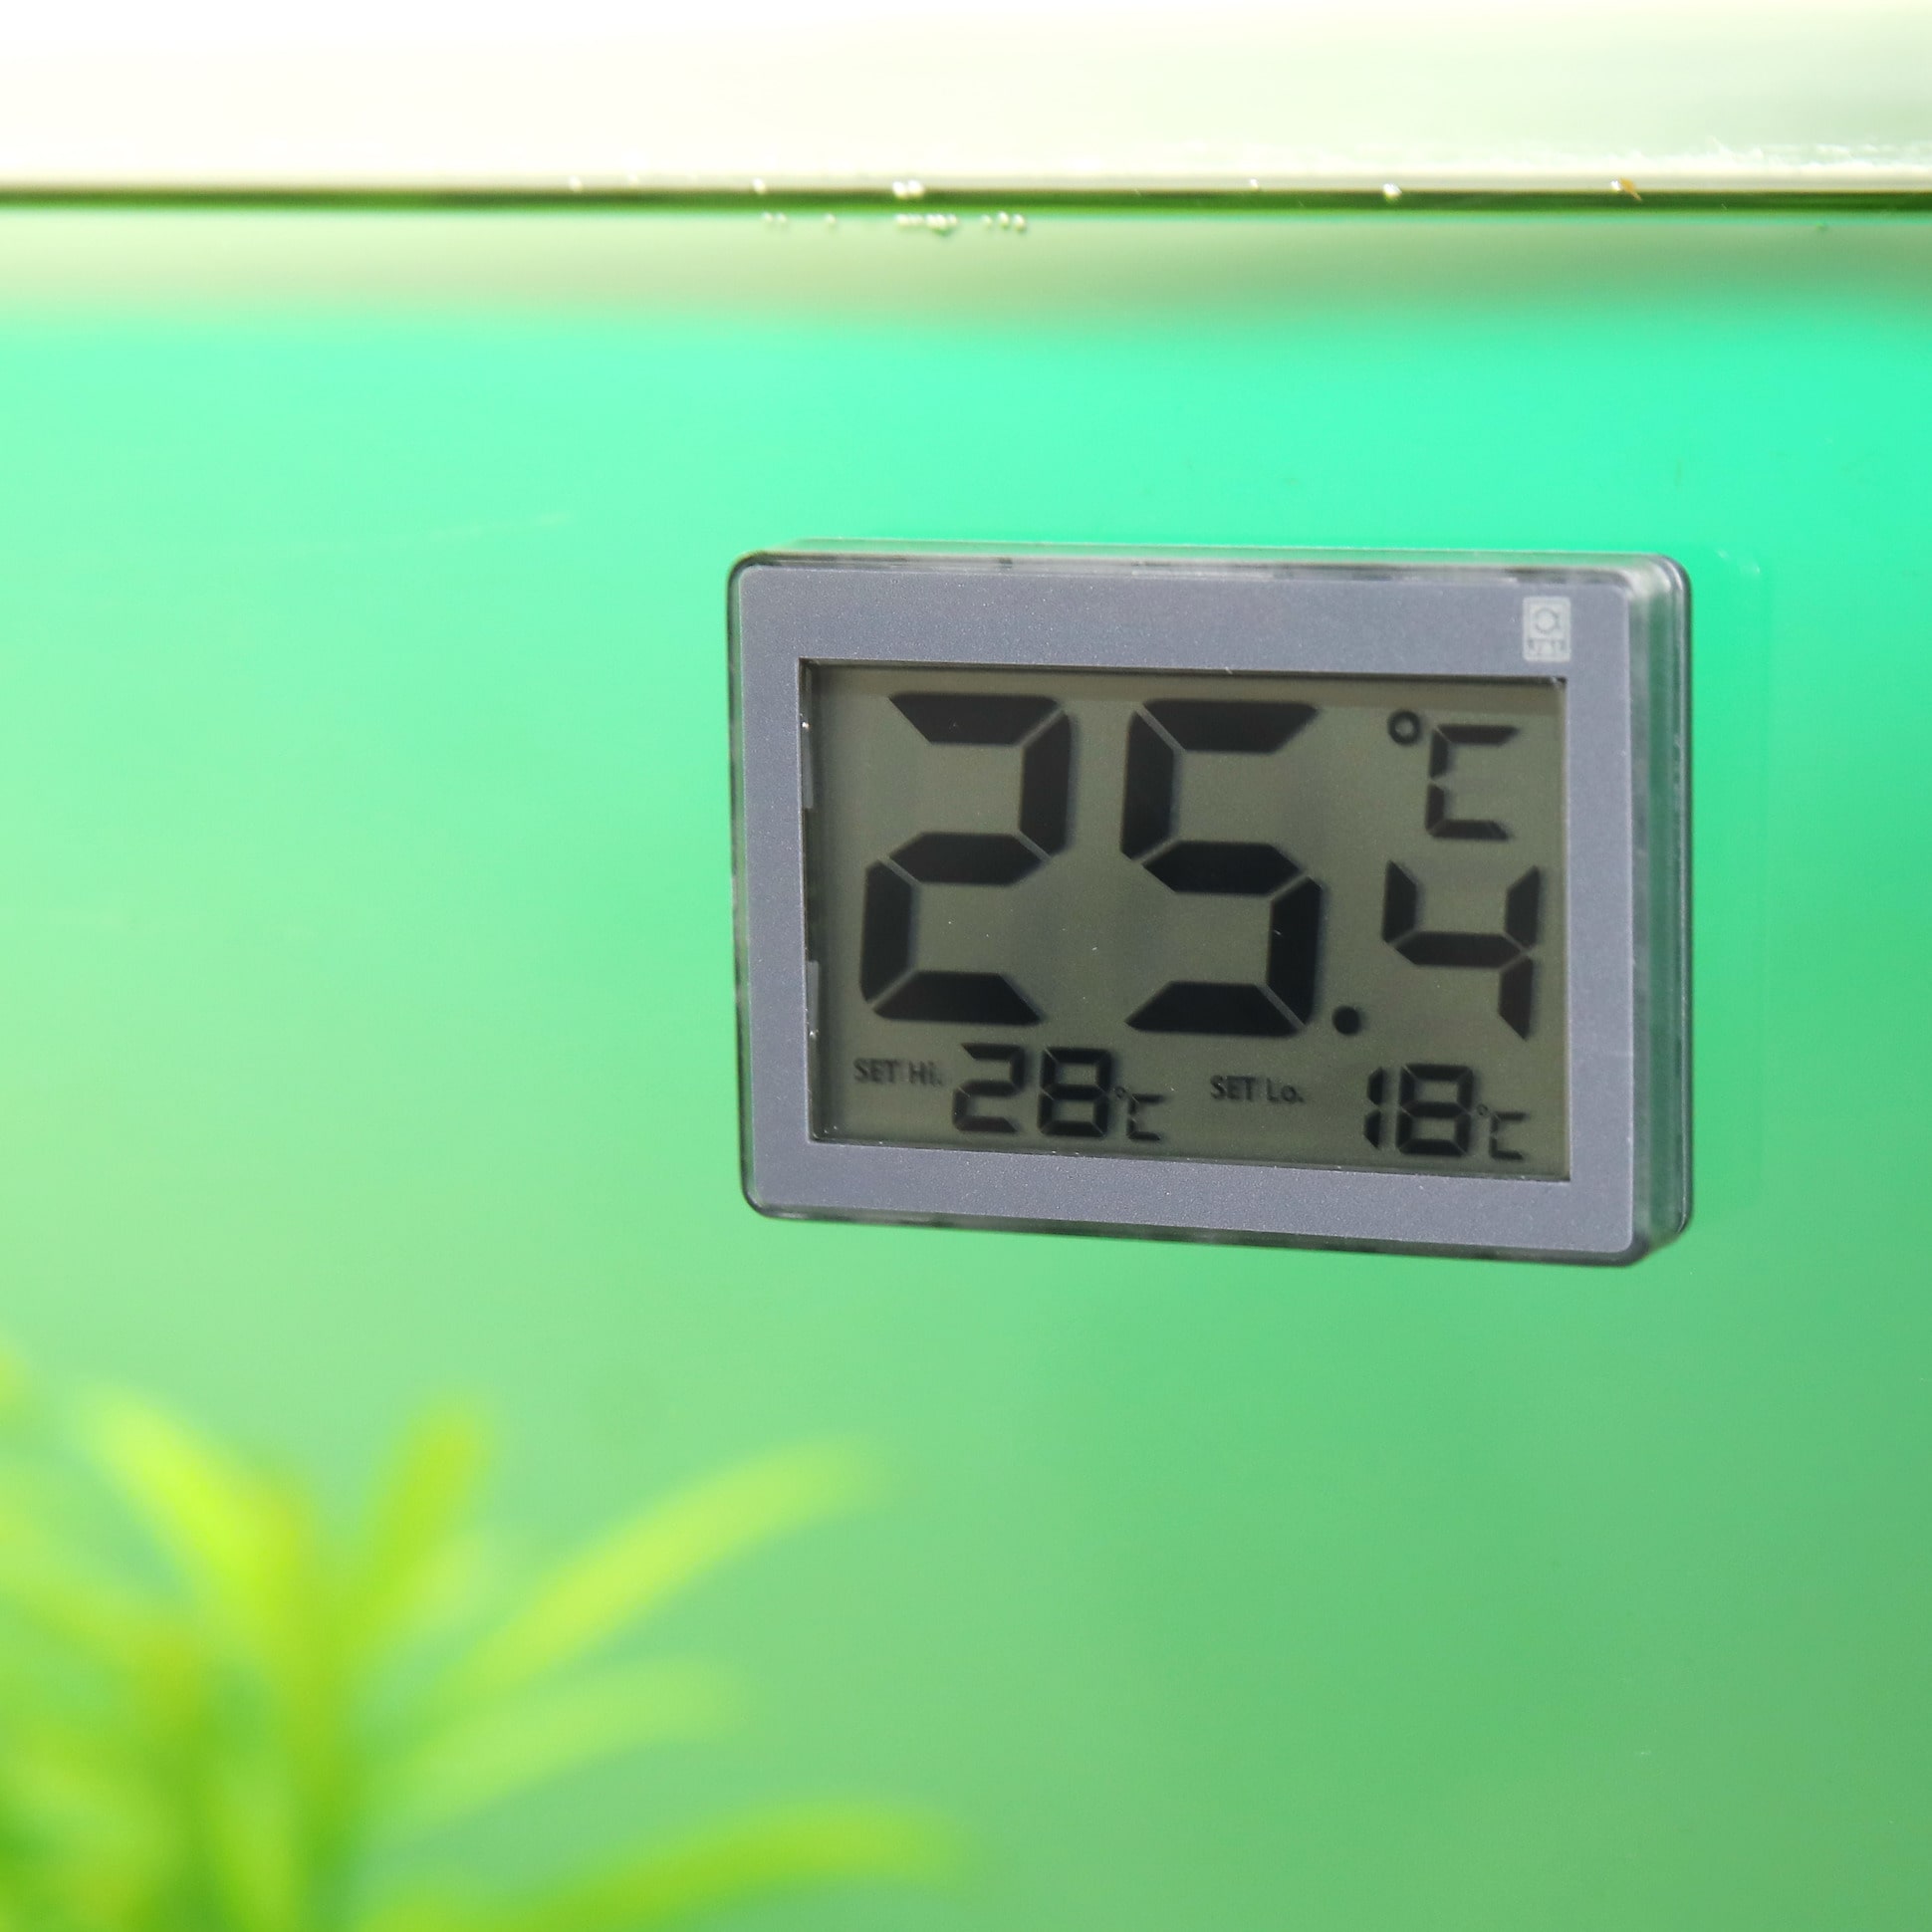 jbl-digiscan-alarm-thermometre-numerique-installer sur-la-vitre-d-aquarium-min